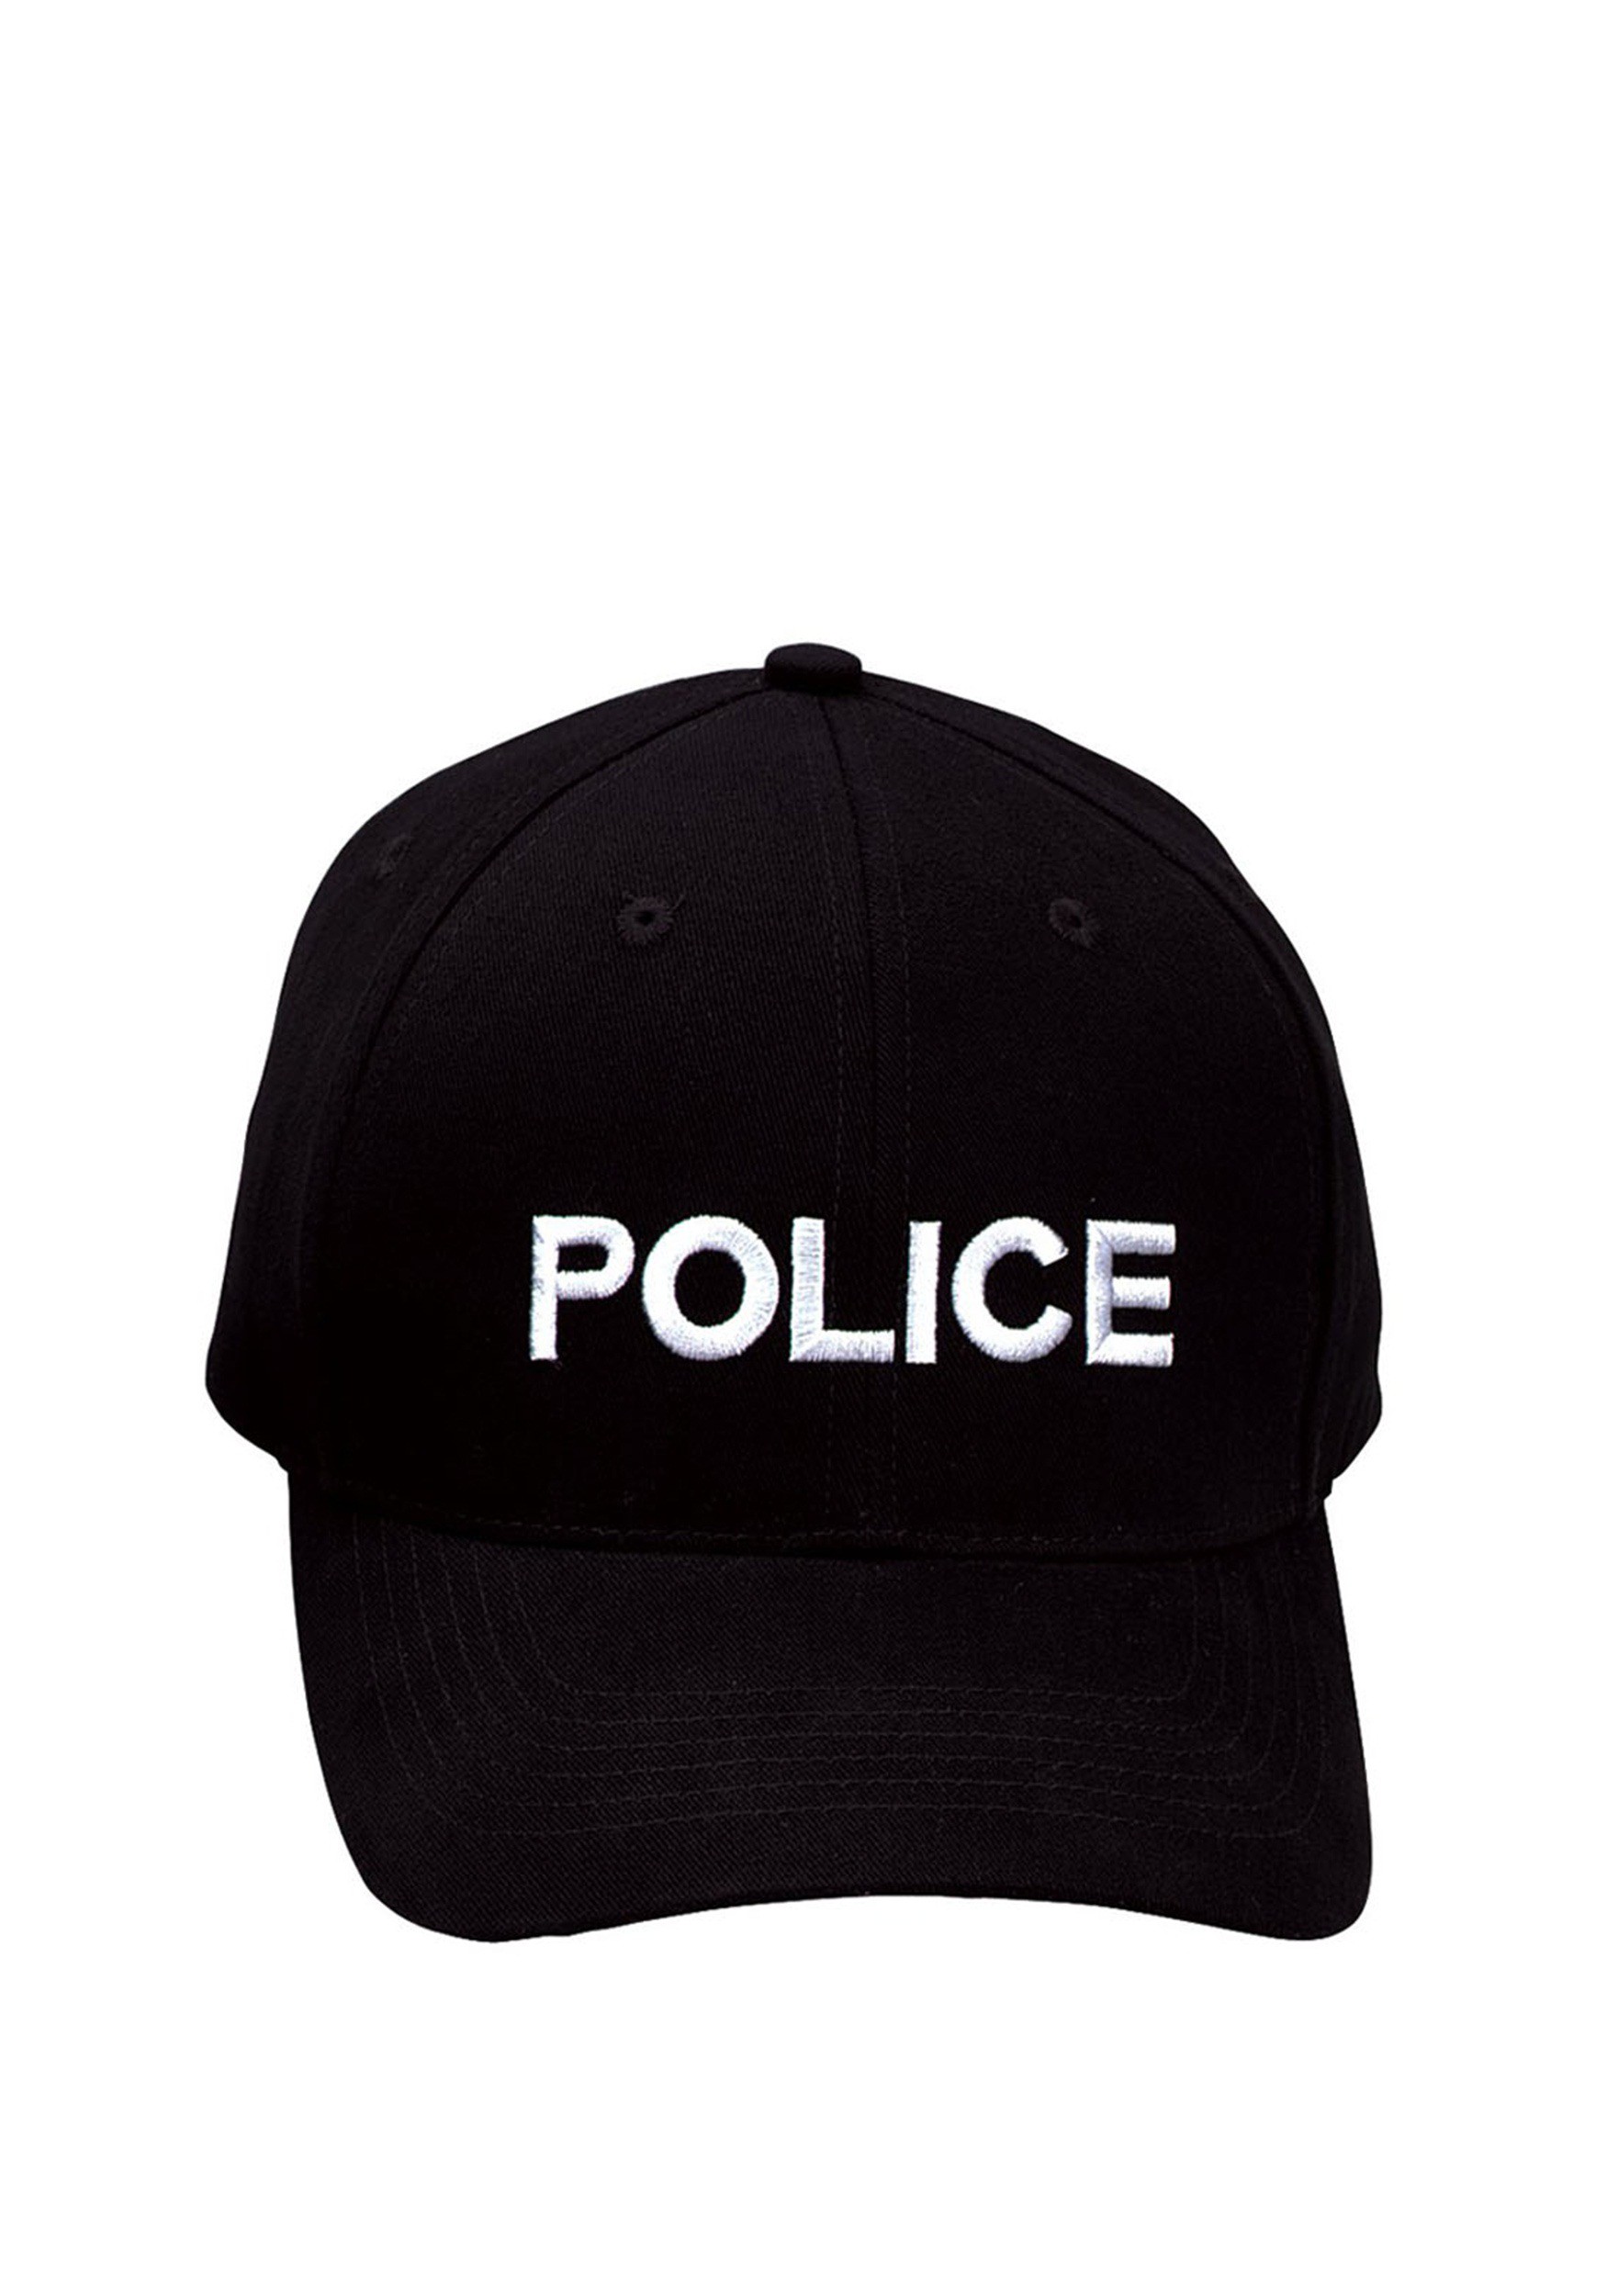 Police Adult Baseball Cap